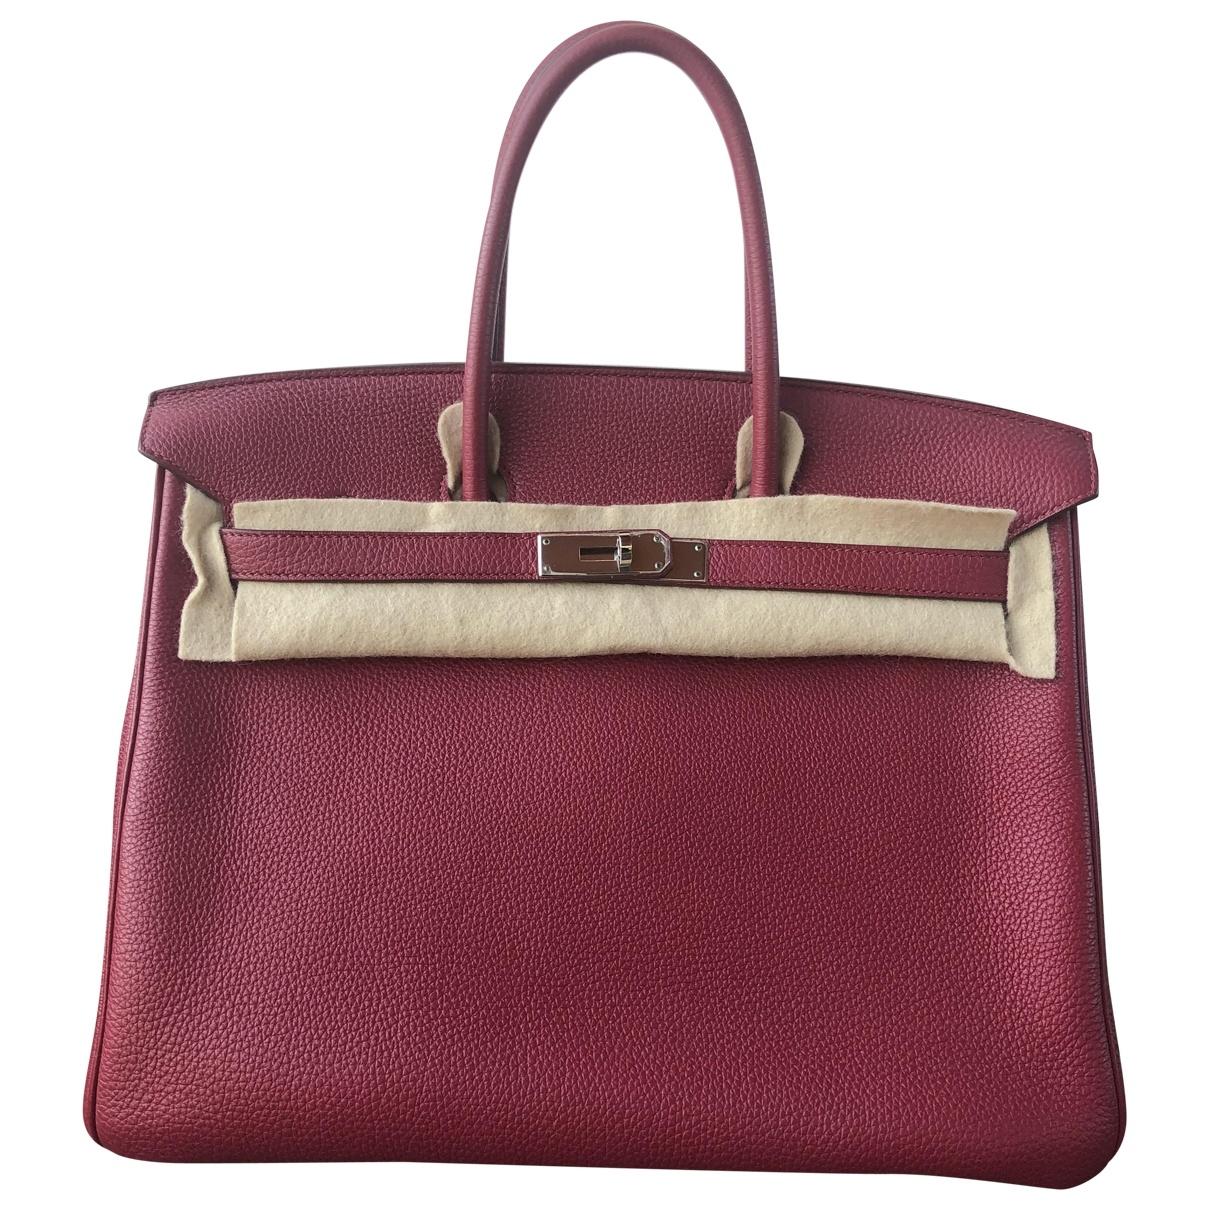 Hermès Birkin 35 Red Leather Handbag in Red - Lyst